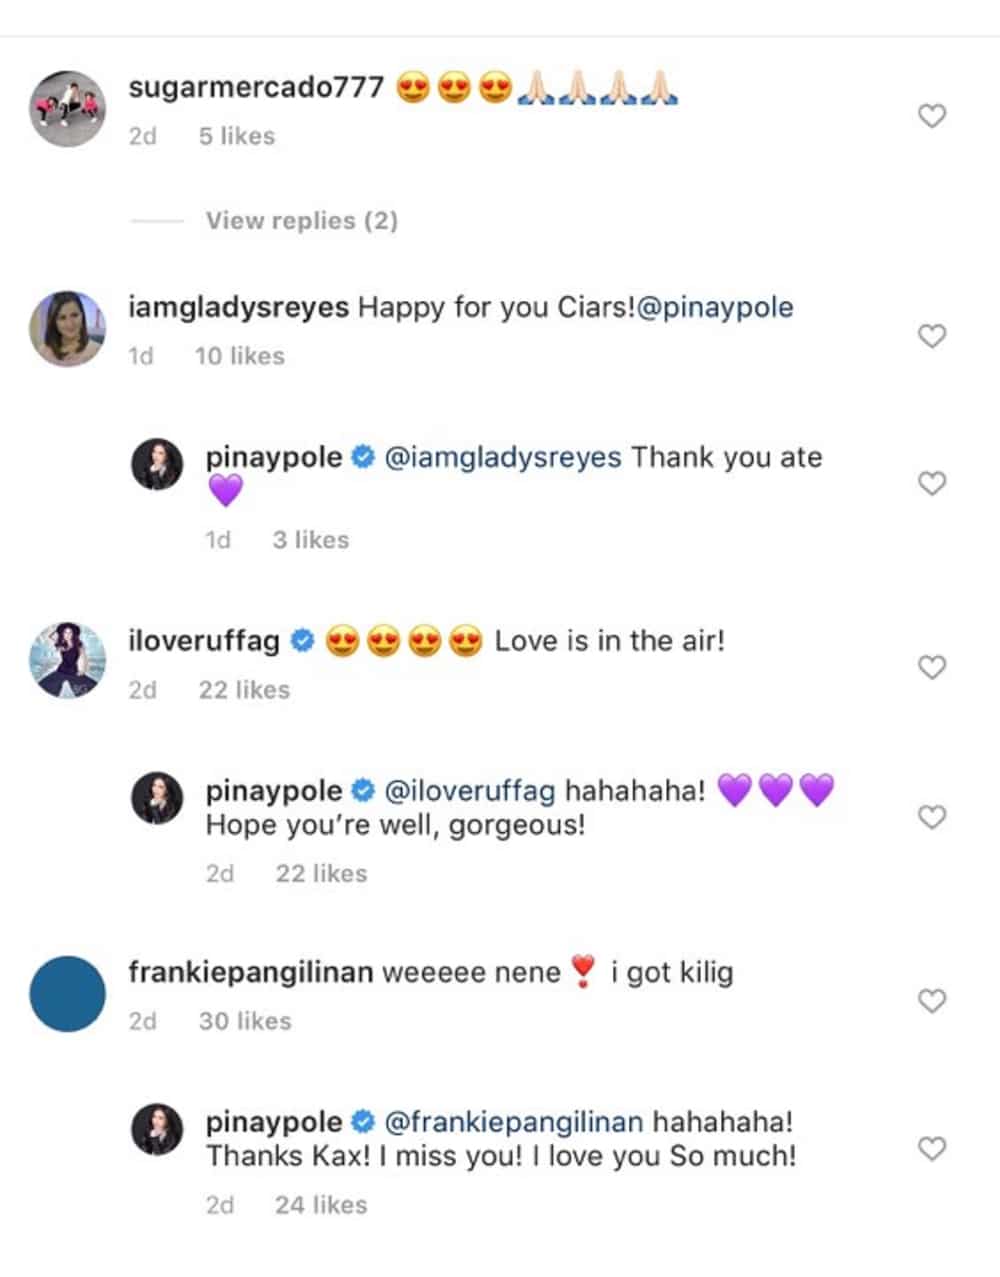 Ruffa Gutierrez, other celebrities gush over Ciara's Sotto's sweet message for her non-showbiz boyfriend